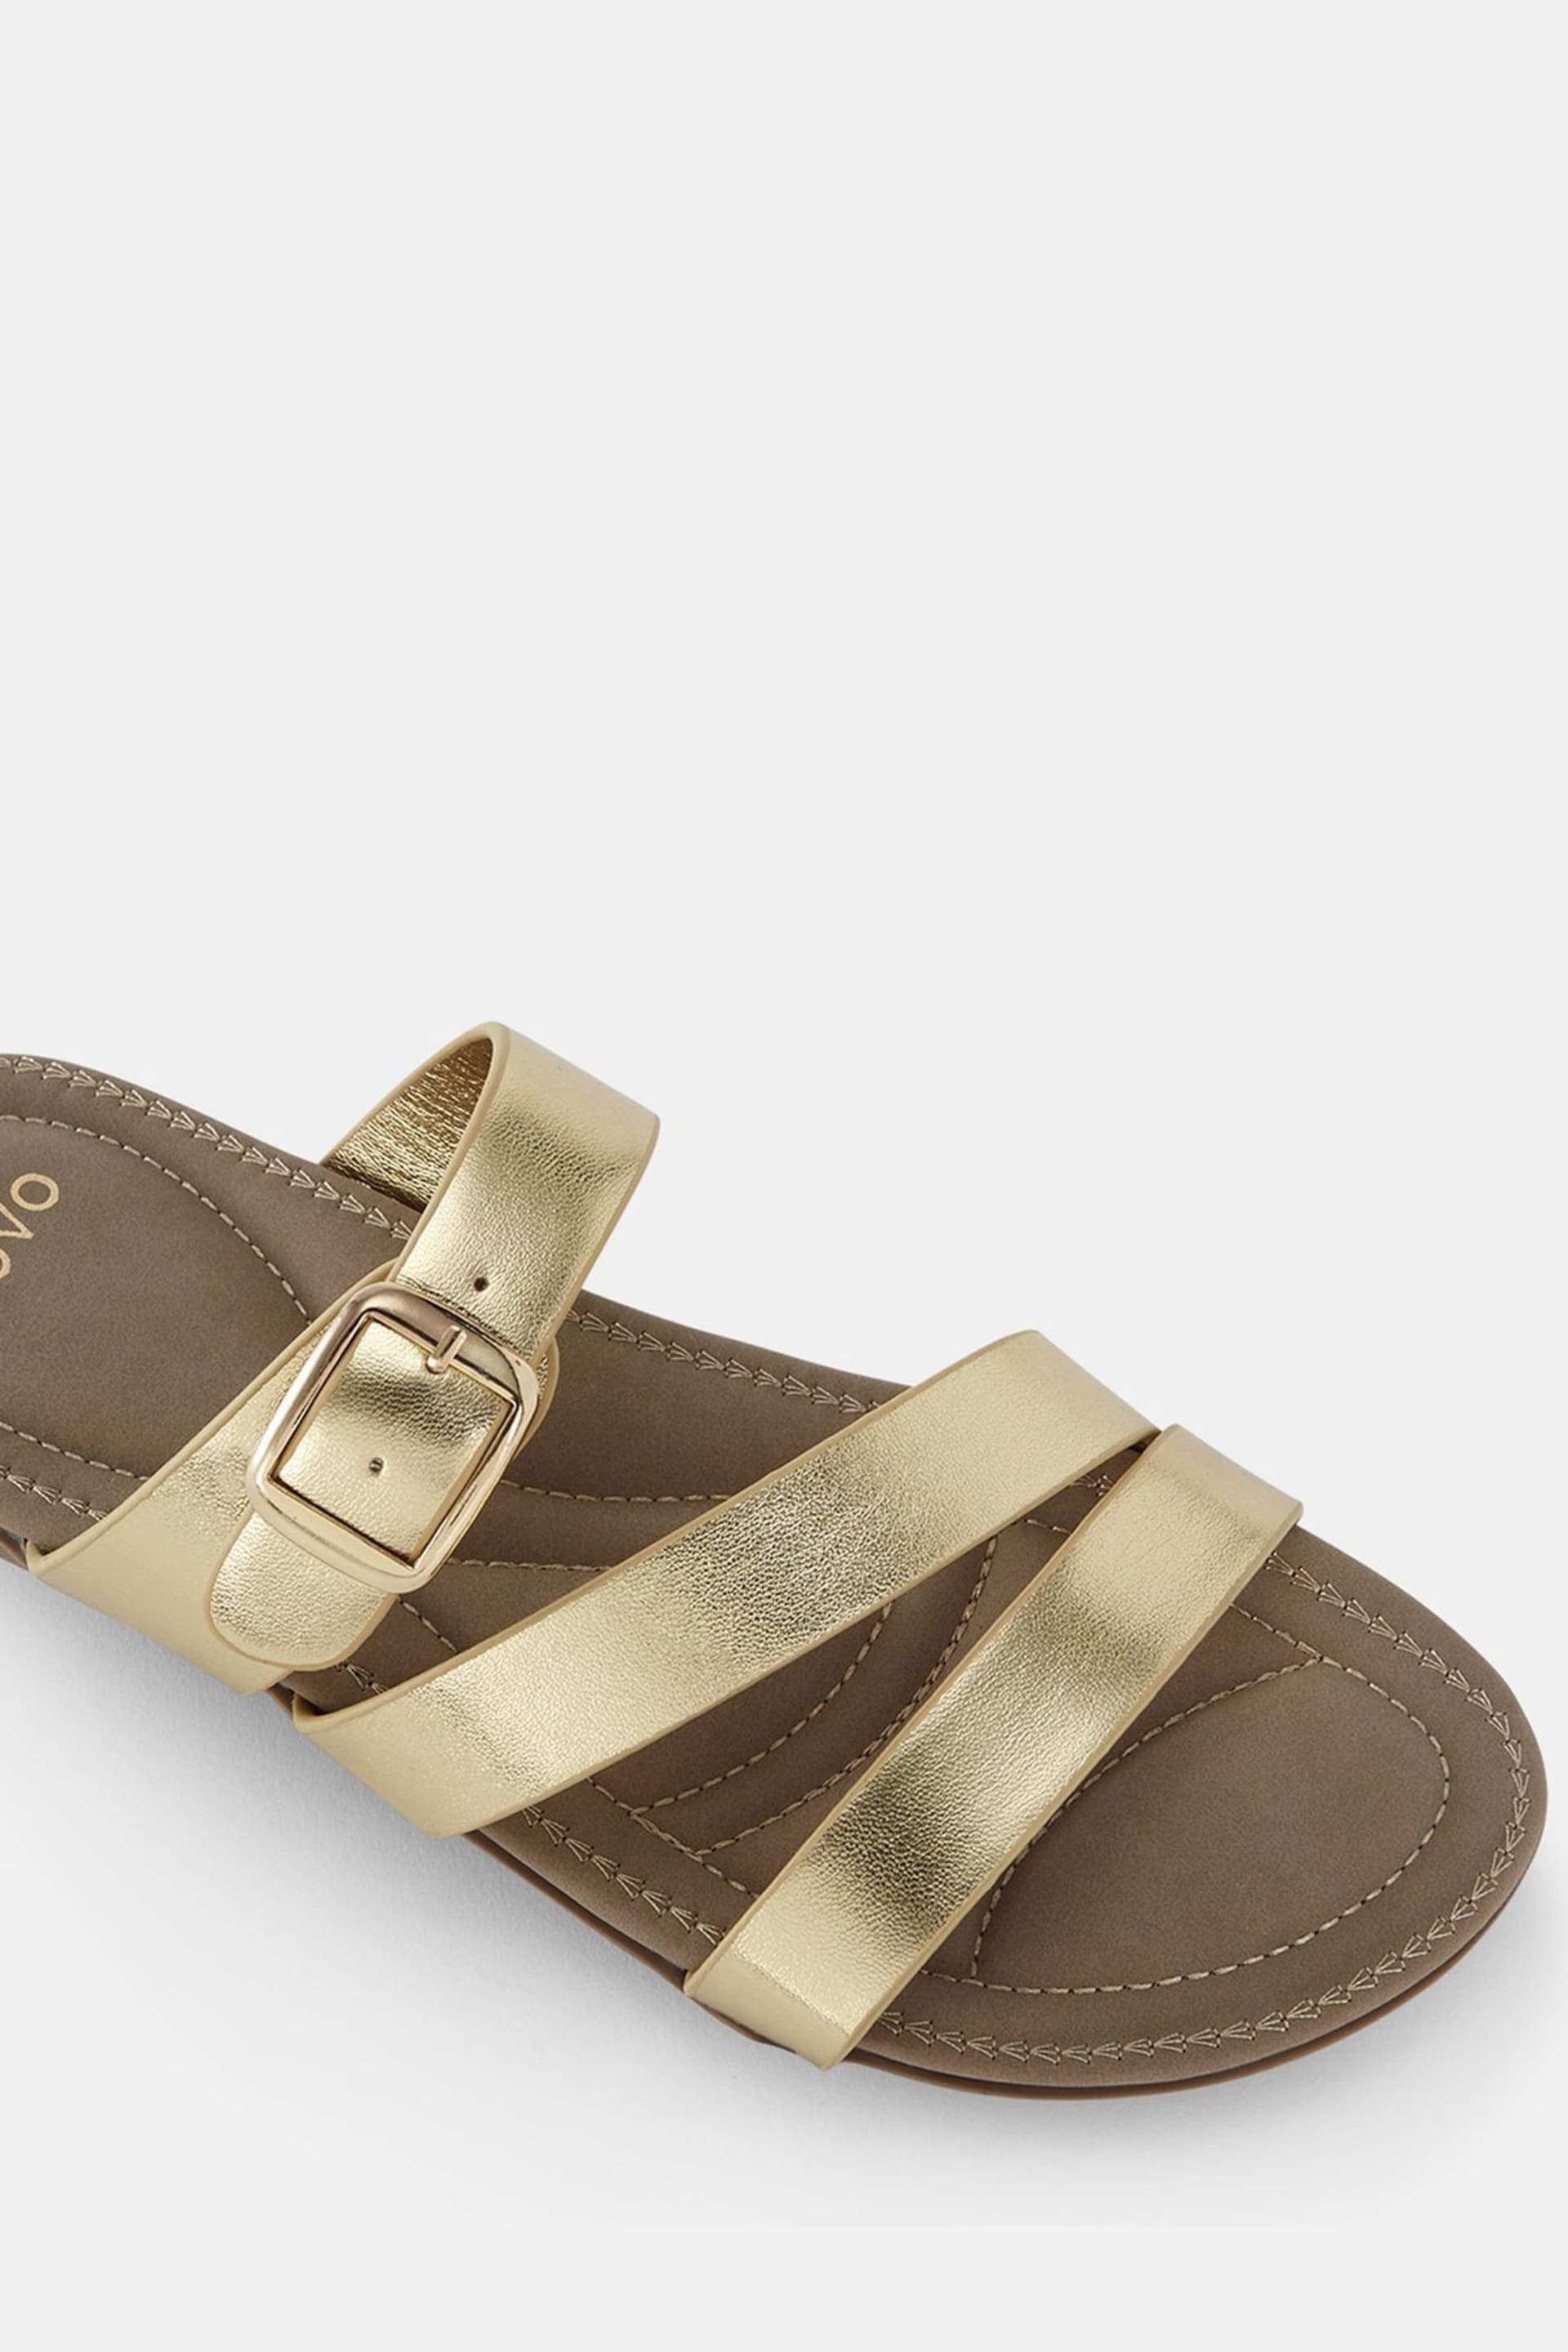 Novo Gold Tia Strappy Mule Sandals - Image 6 of 6